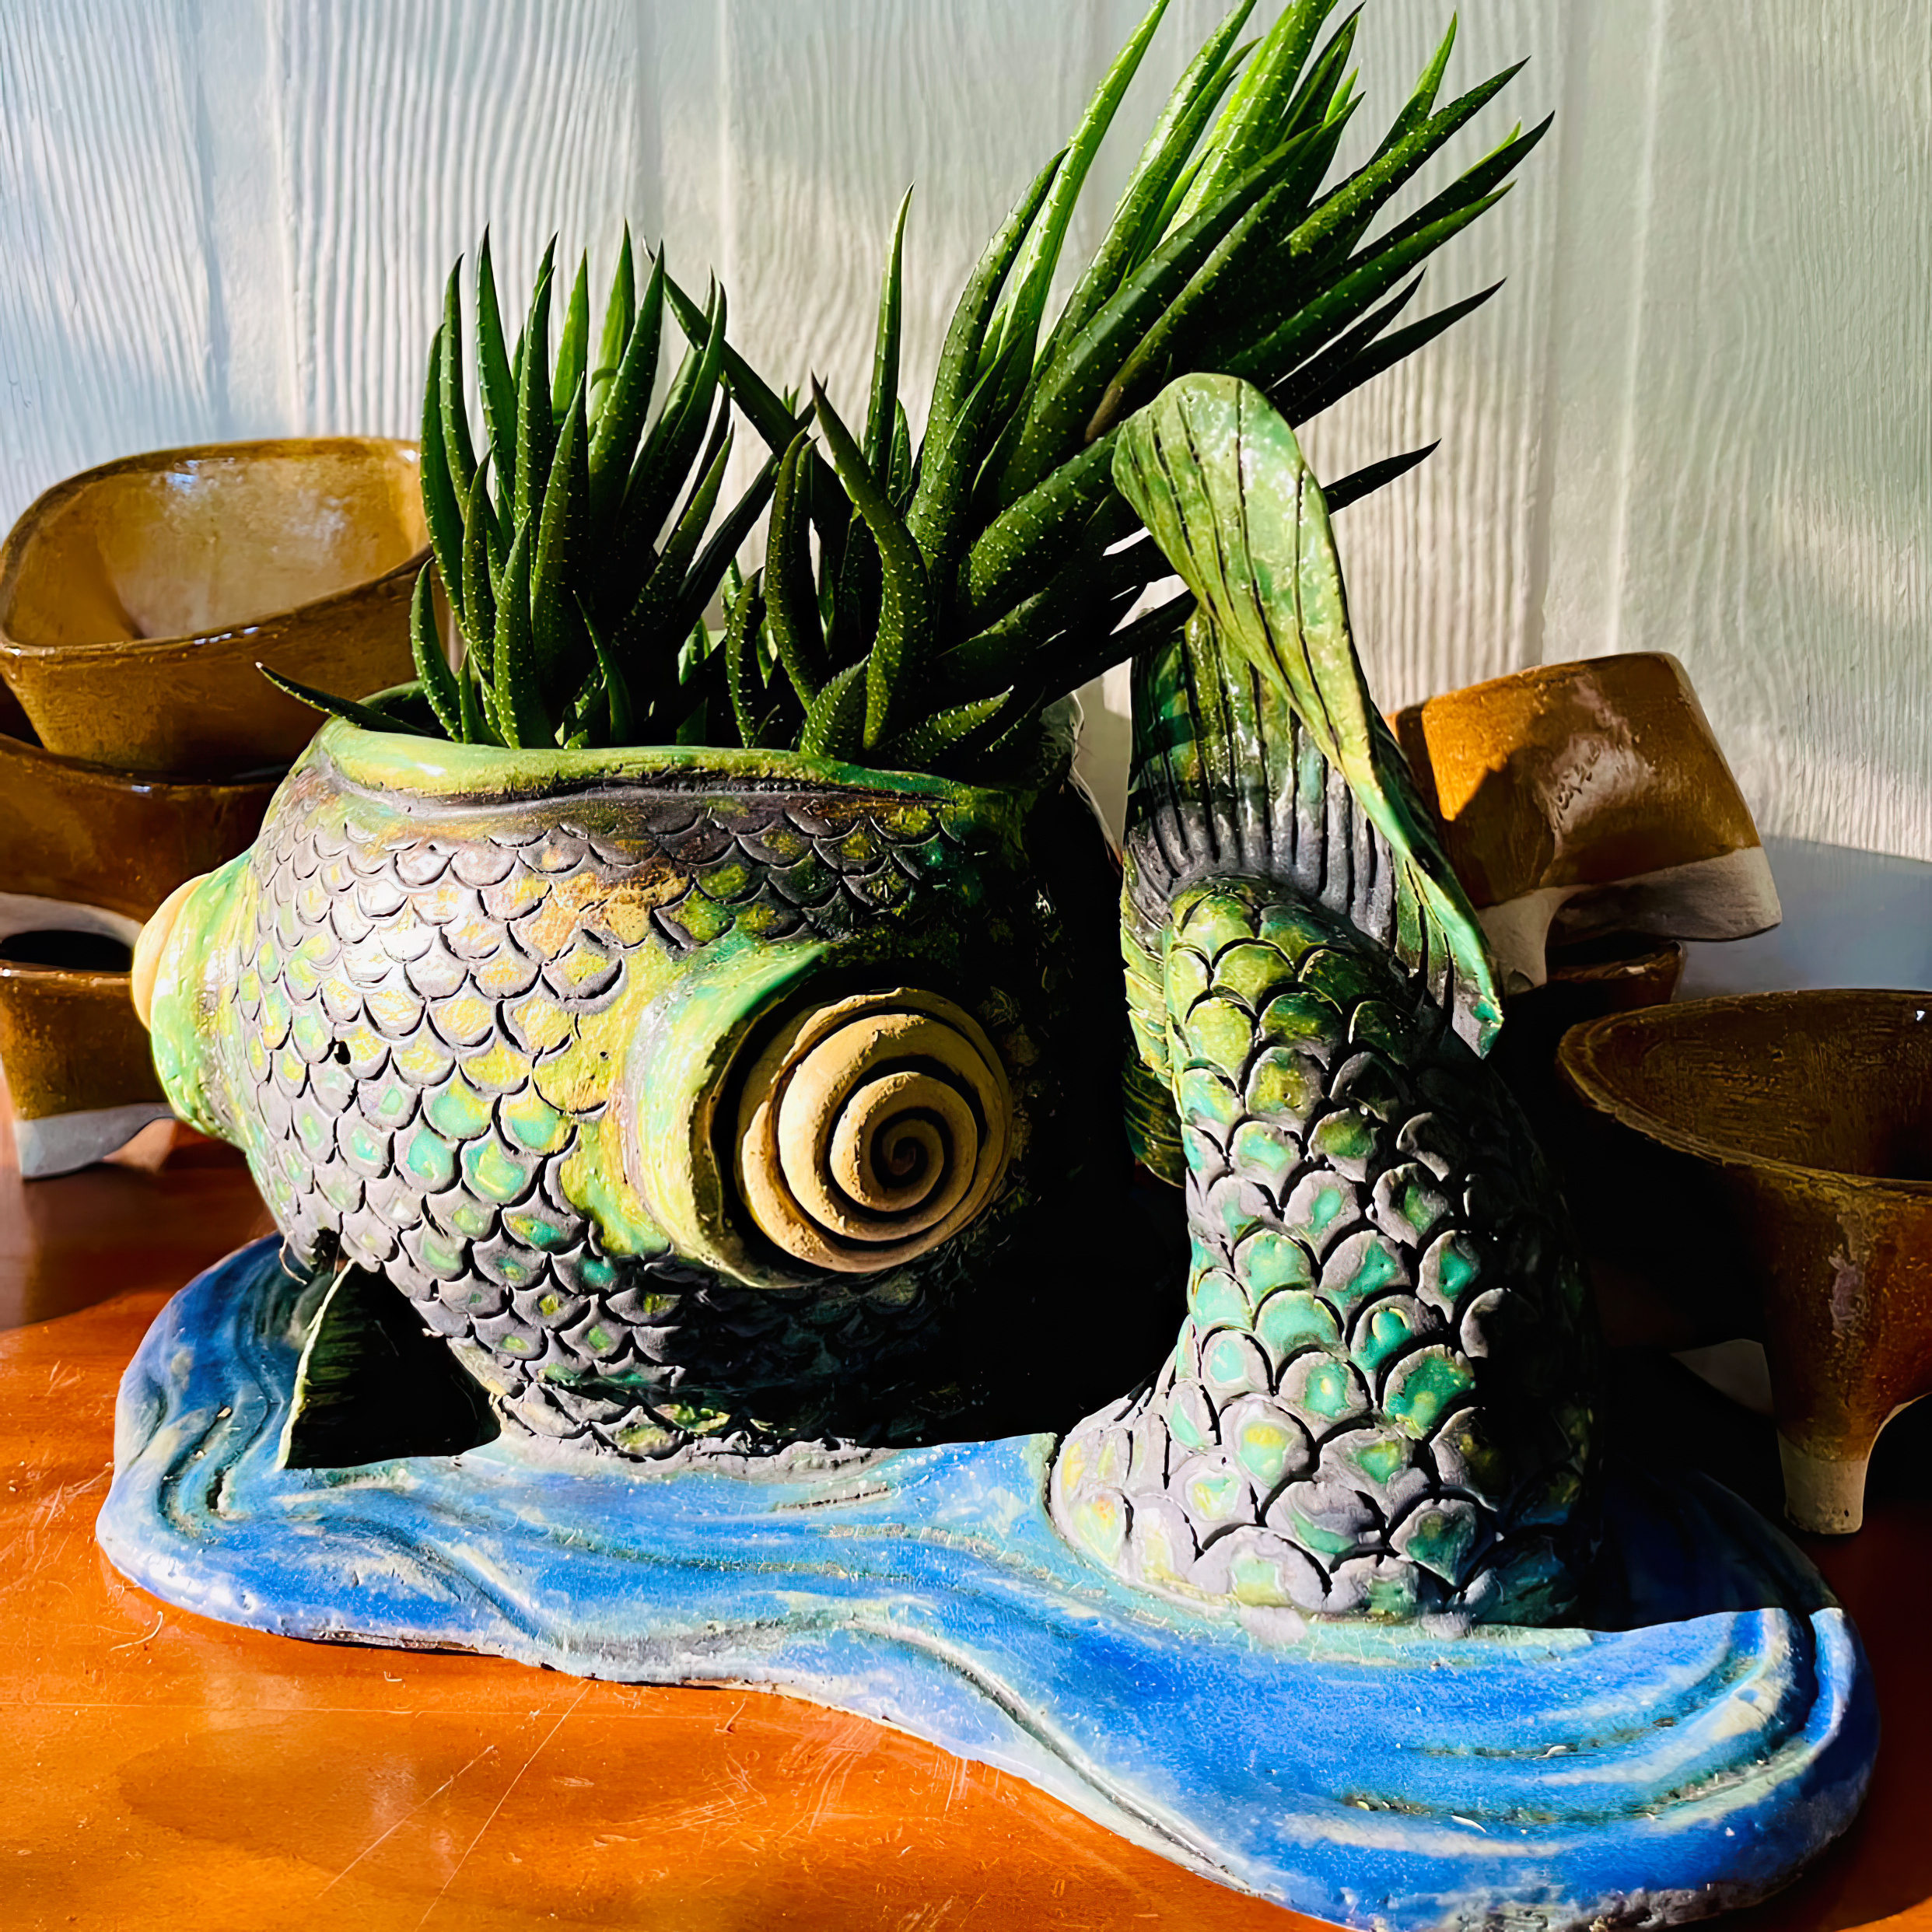 Ceramic fish pot with succulent in mouth - Amelia Ogg - Insperata Floruit